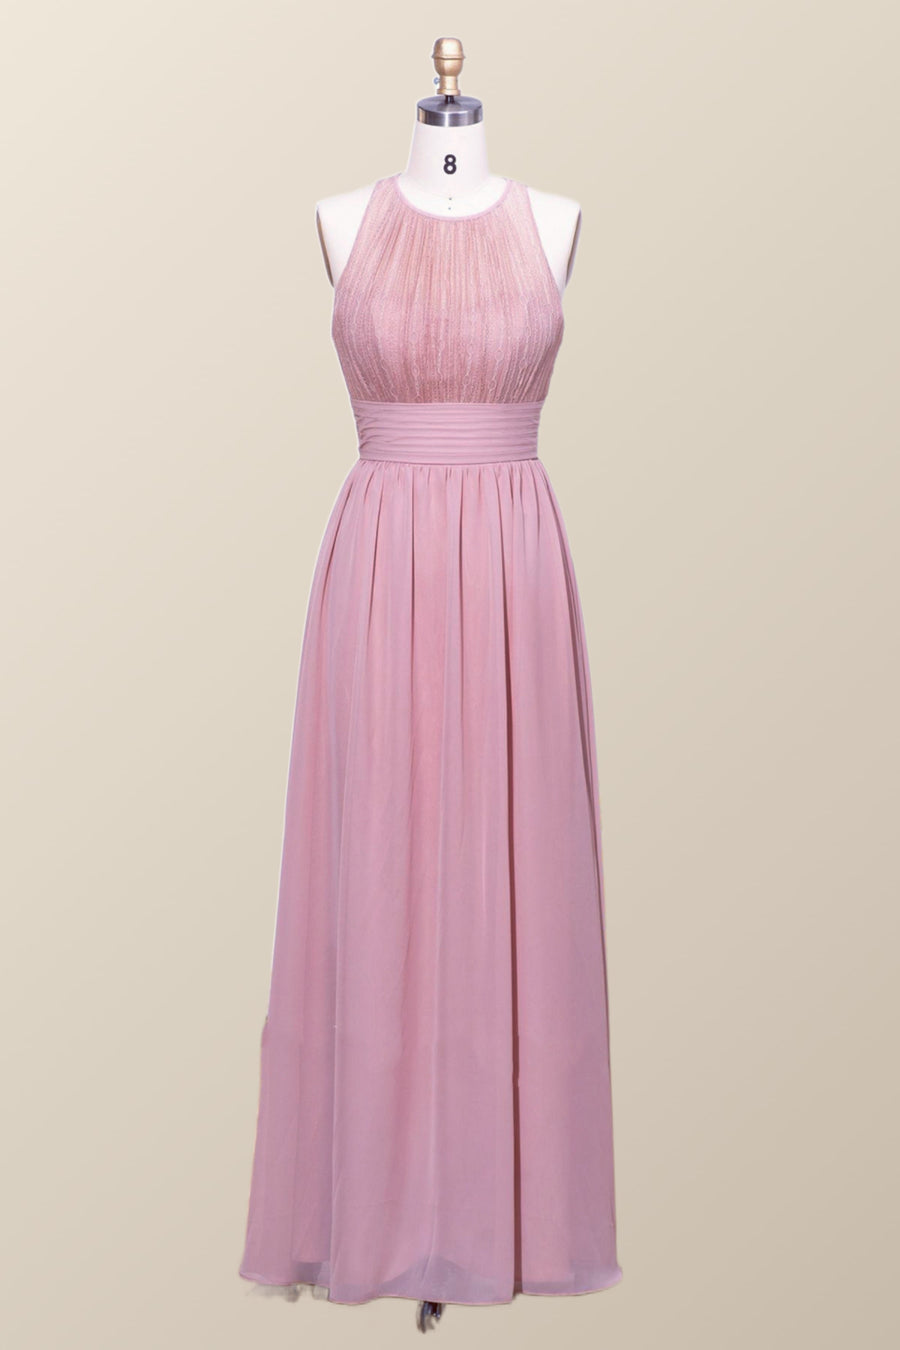 Halter Blush Pink Chiffon A-line Long Bridesmaid Dress